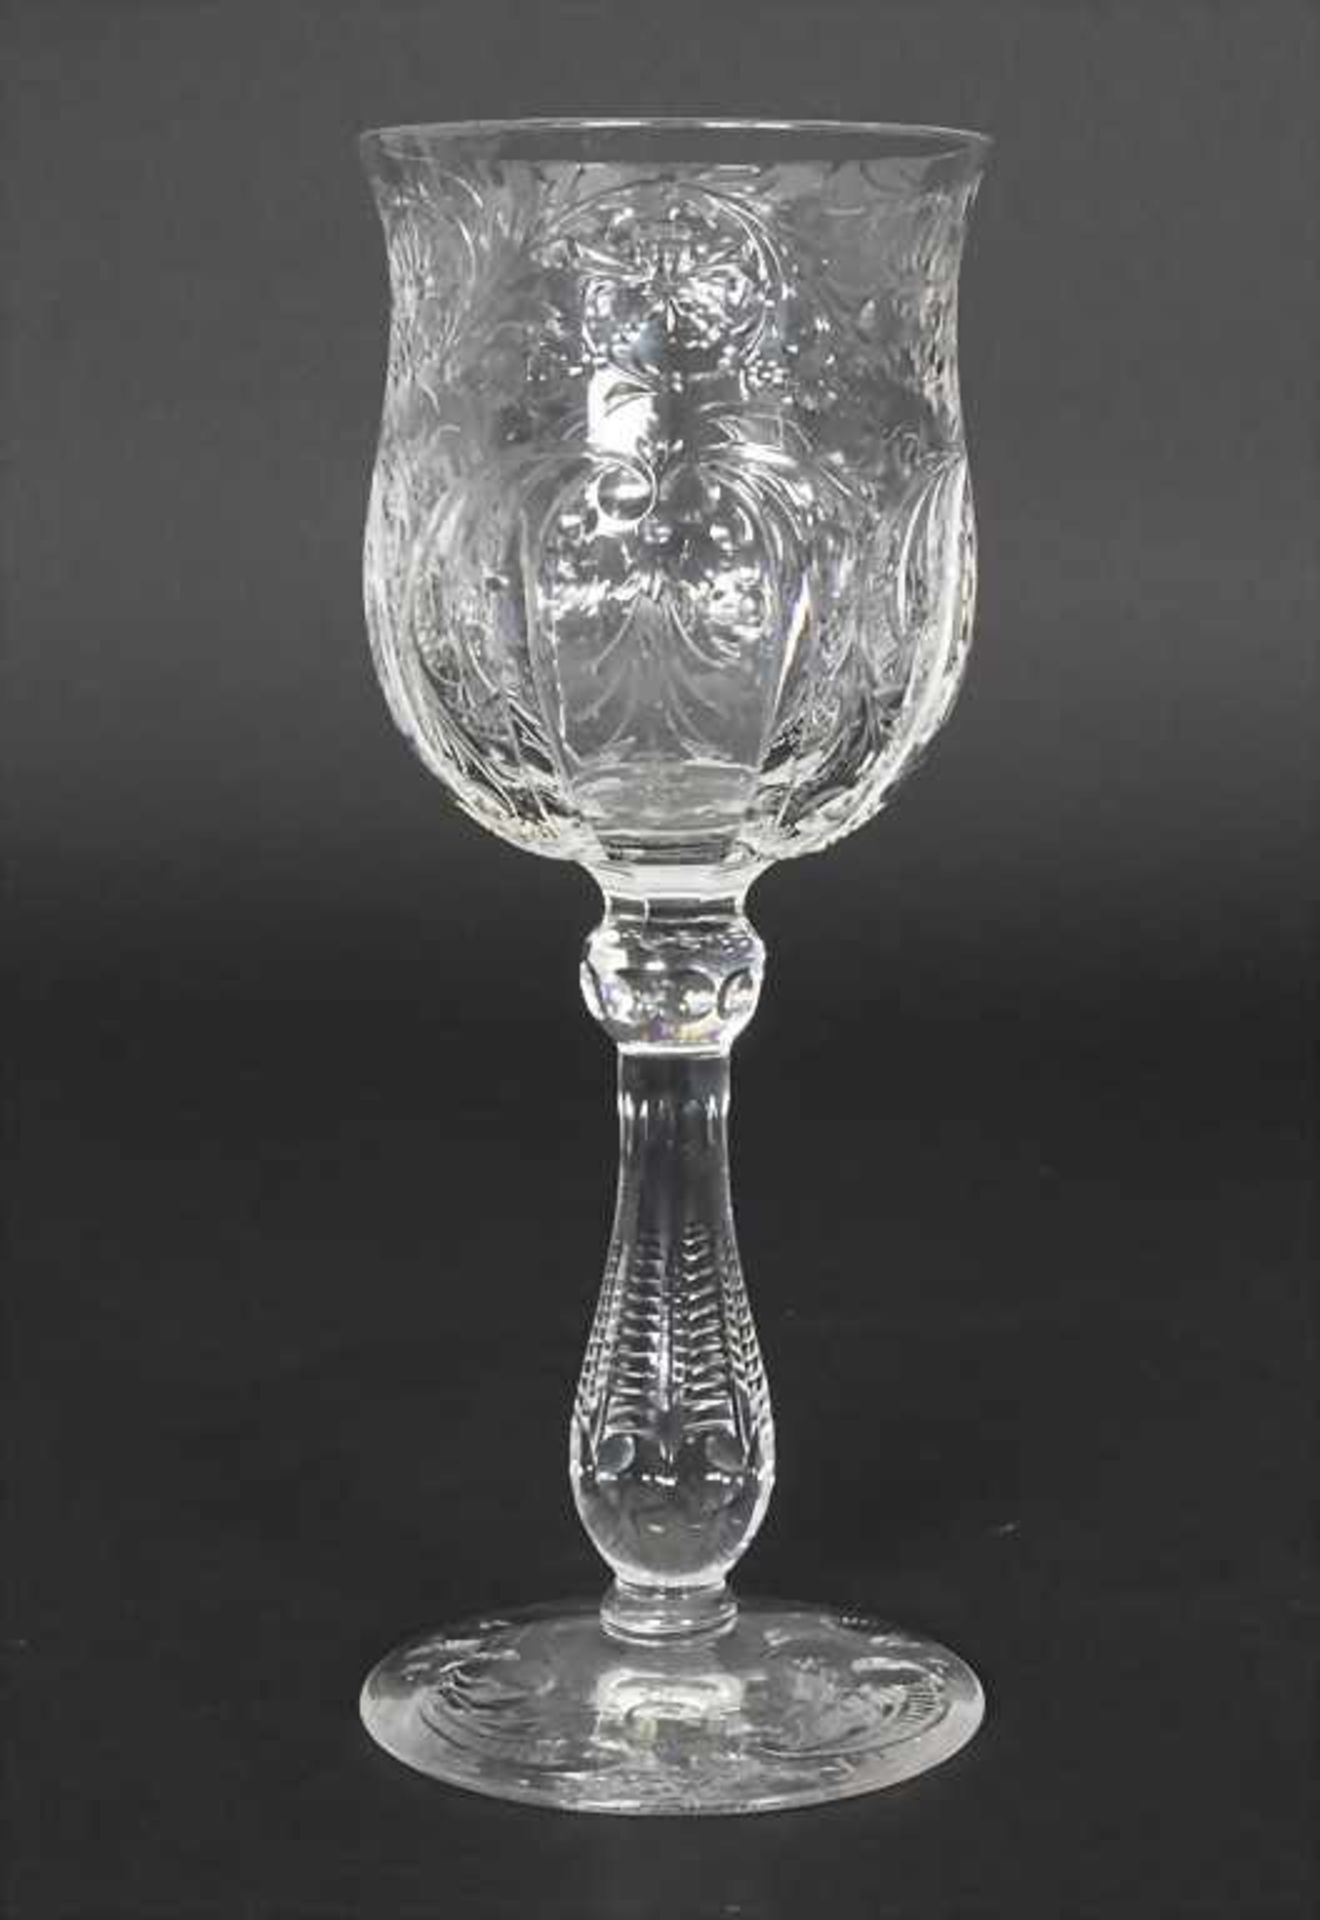 Weinglas / A wine glass, Frankreich, 19. Jh.Material: farbloses Glas, geschliffen,Höhe: 20,5 cm,